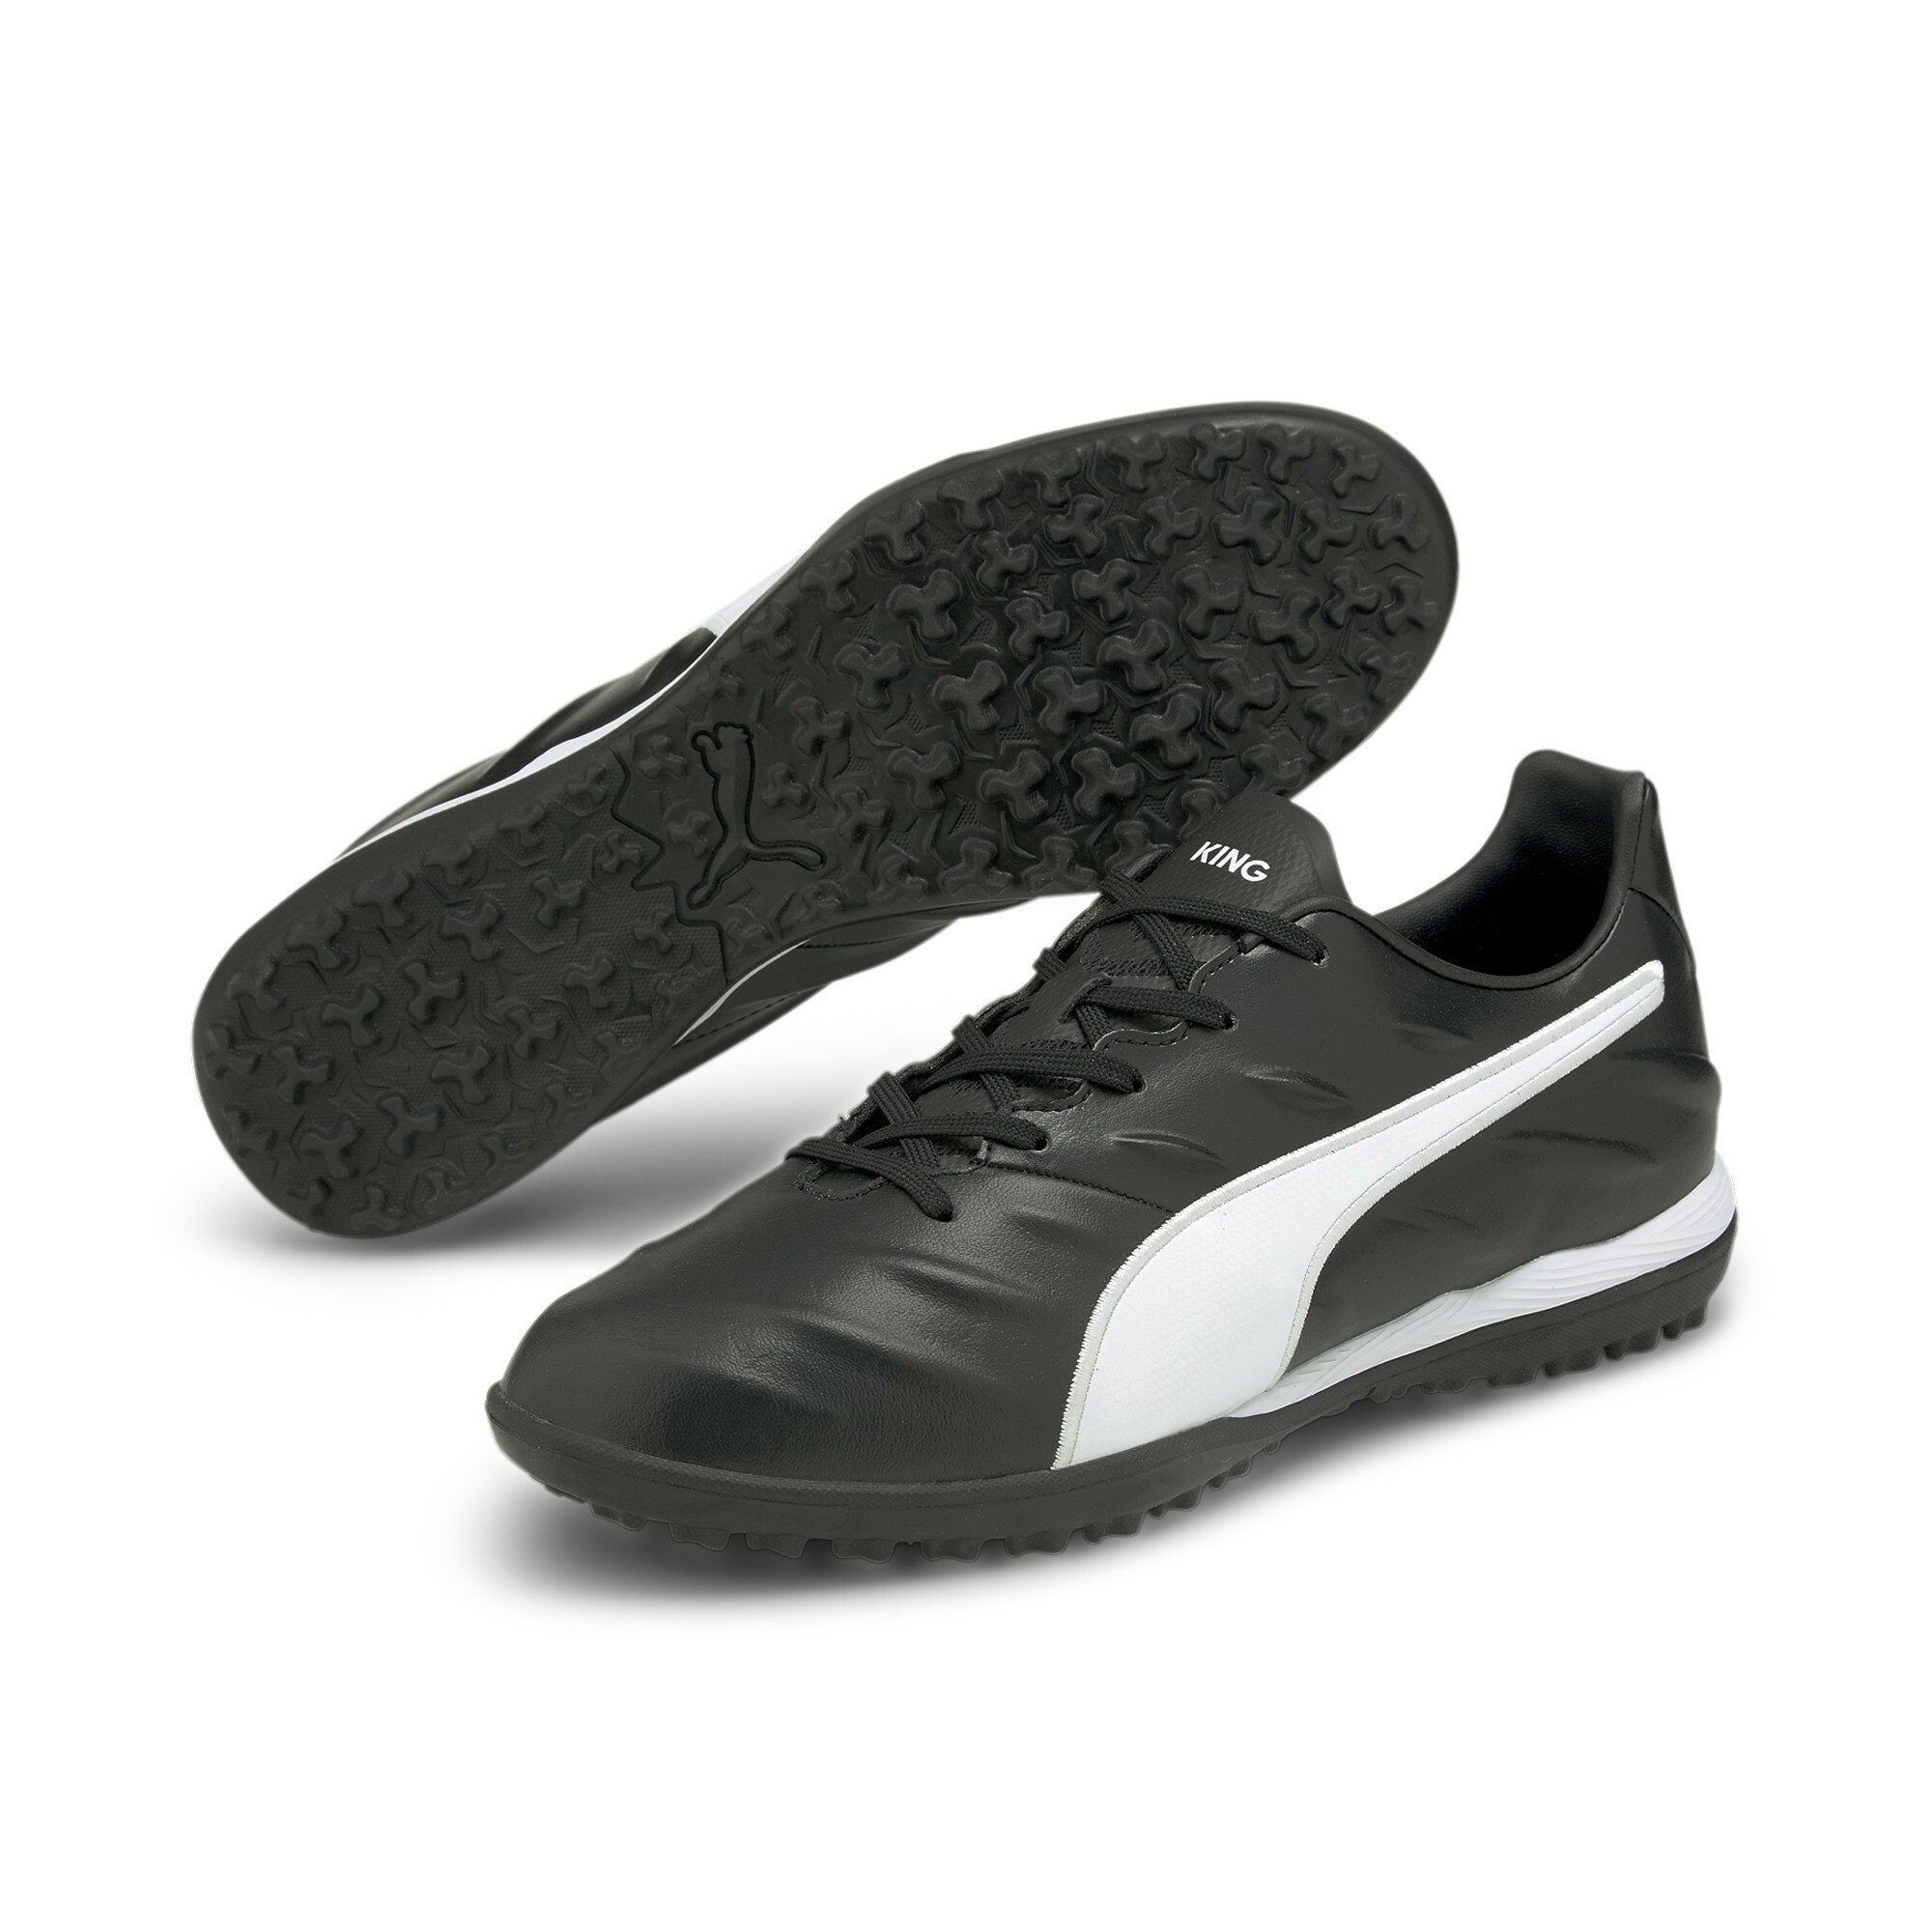 PUMA »King Pro 21 TT Fußballschuhe Regular« Sneaker online kaufen | OTTO